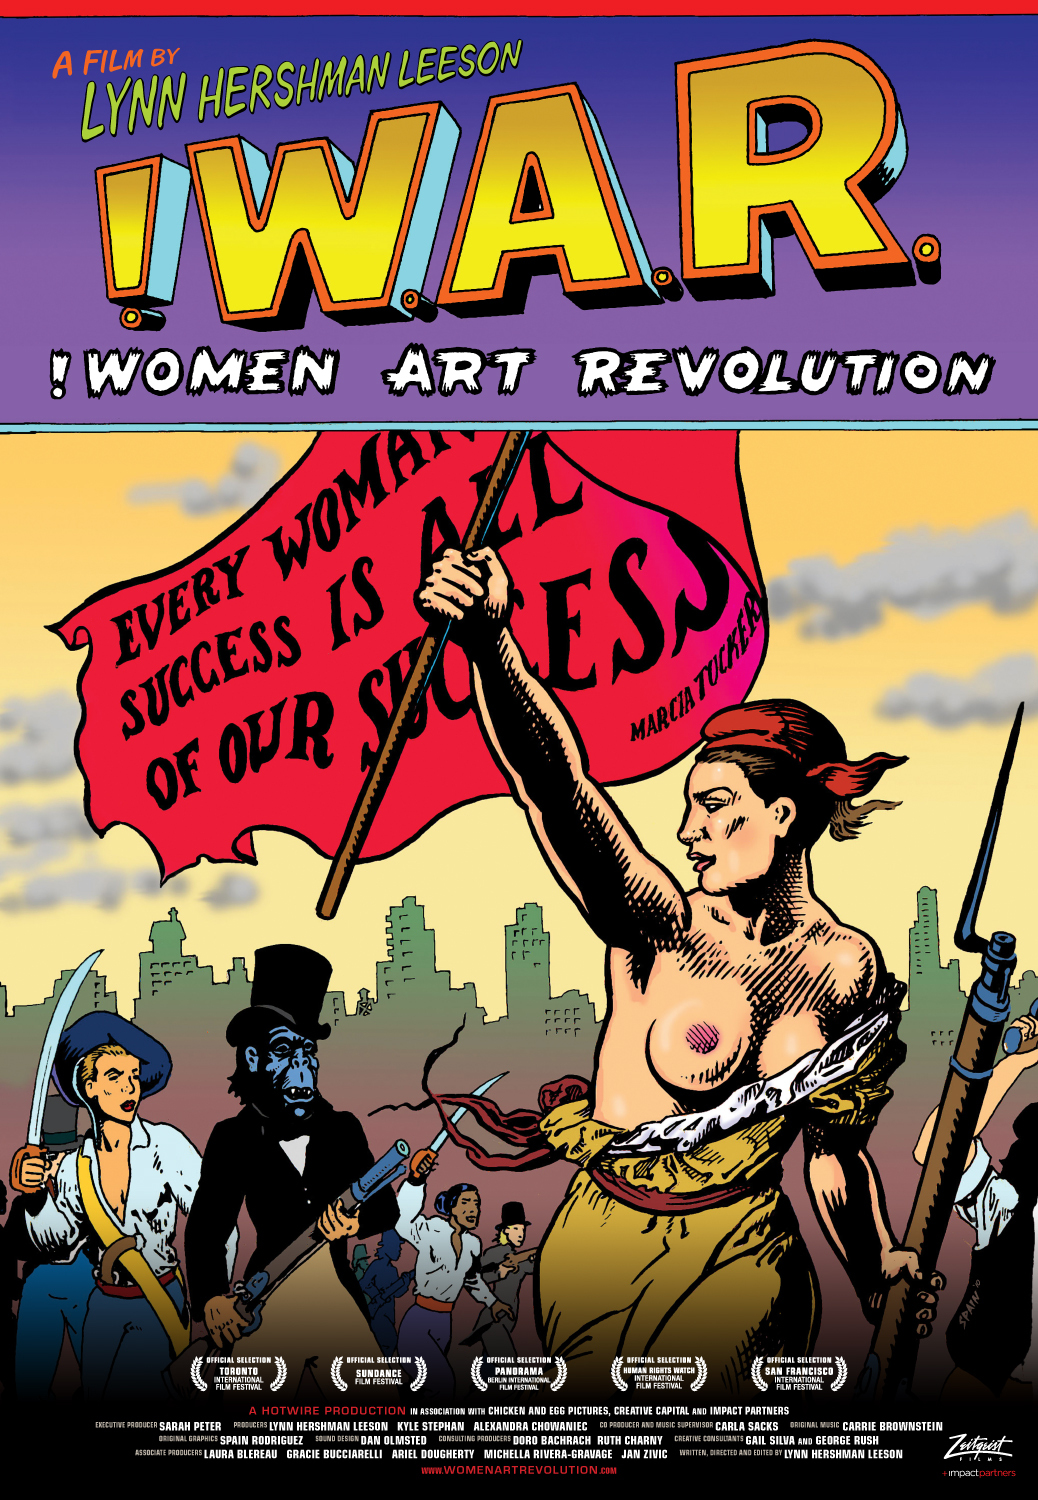 picture-of-women-art-revolution-photo3.jpg